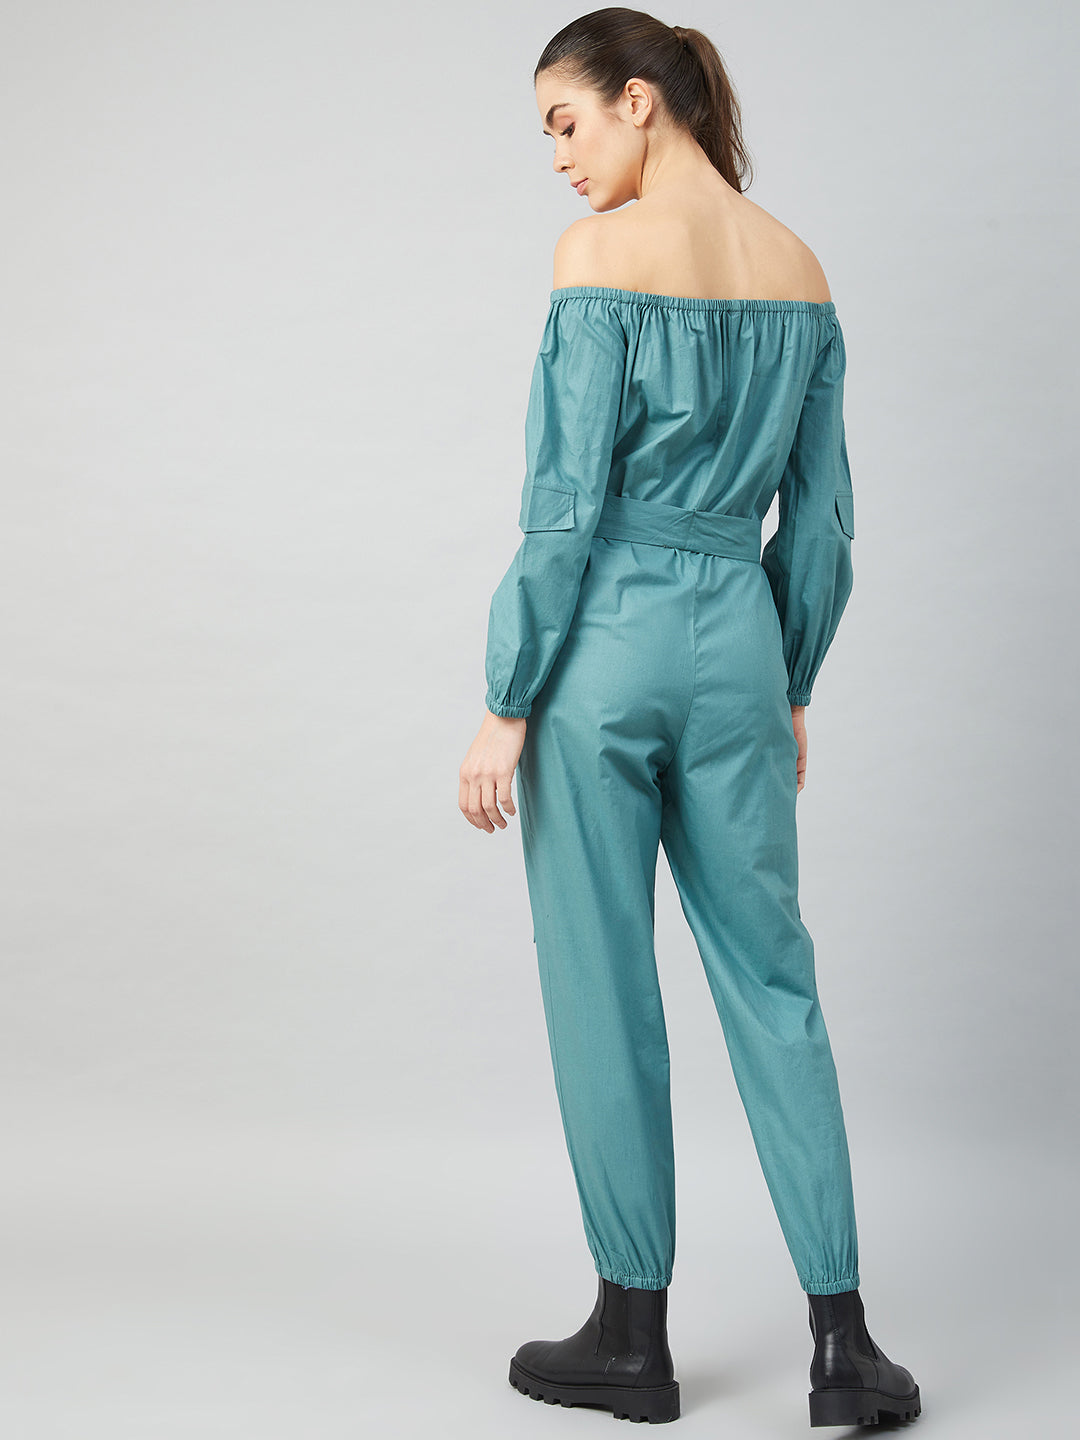 Athena Women Teal Blue Solid Cotton Jumpsuit - Athena Lifestyle